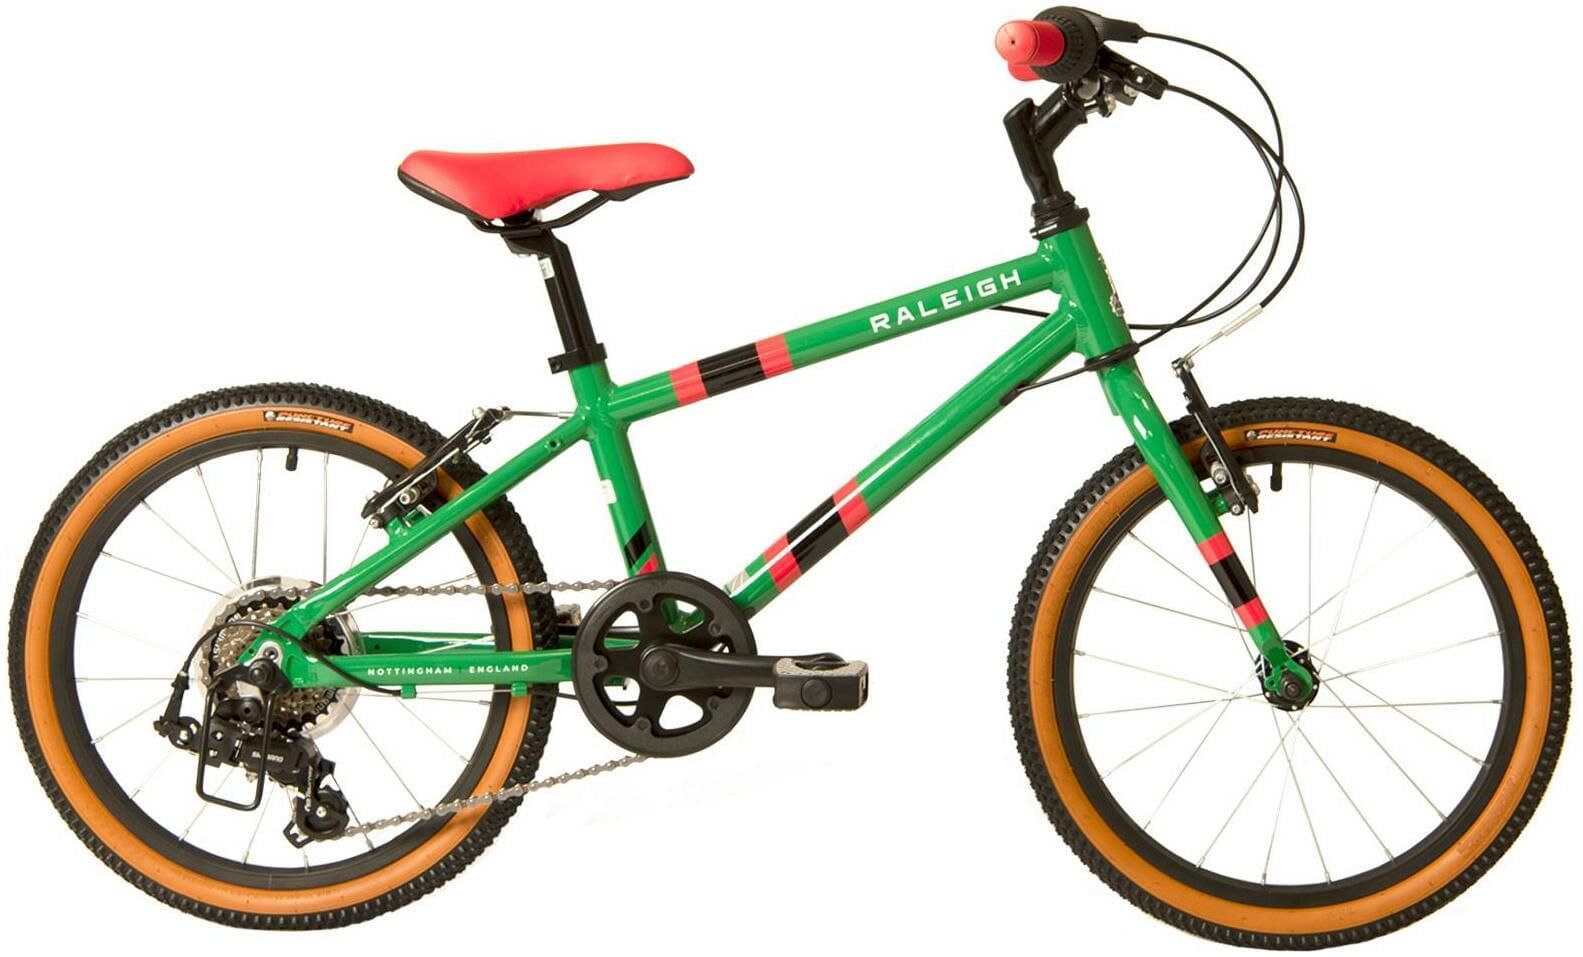 18 inch mountain bike with gears